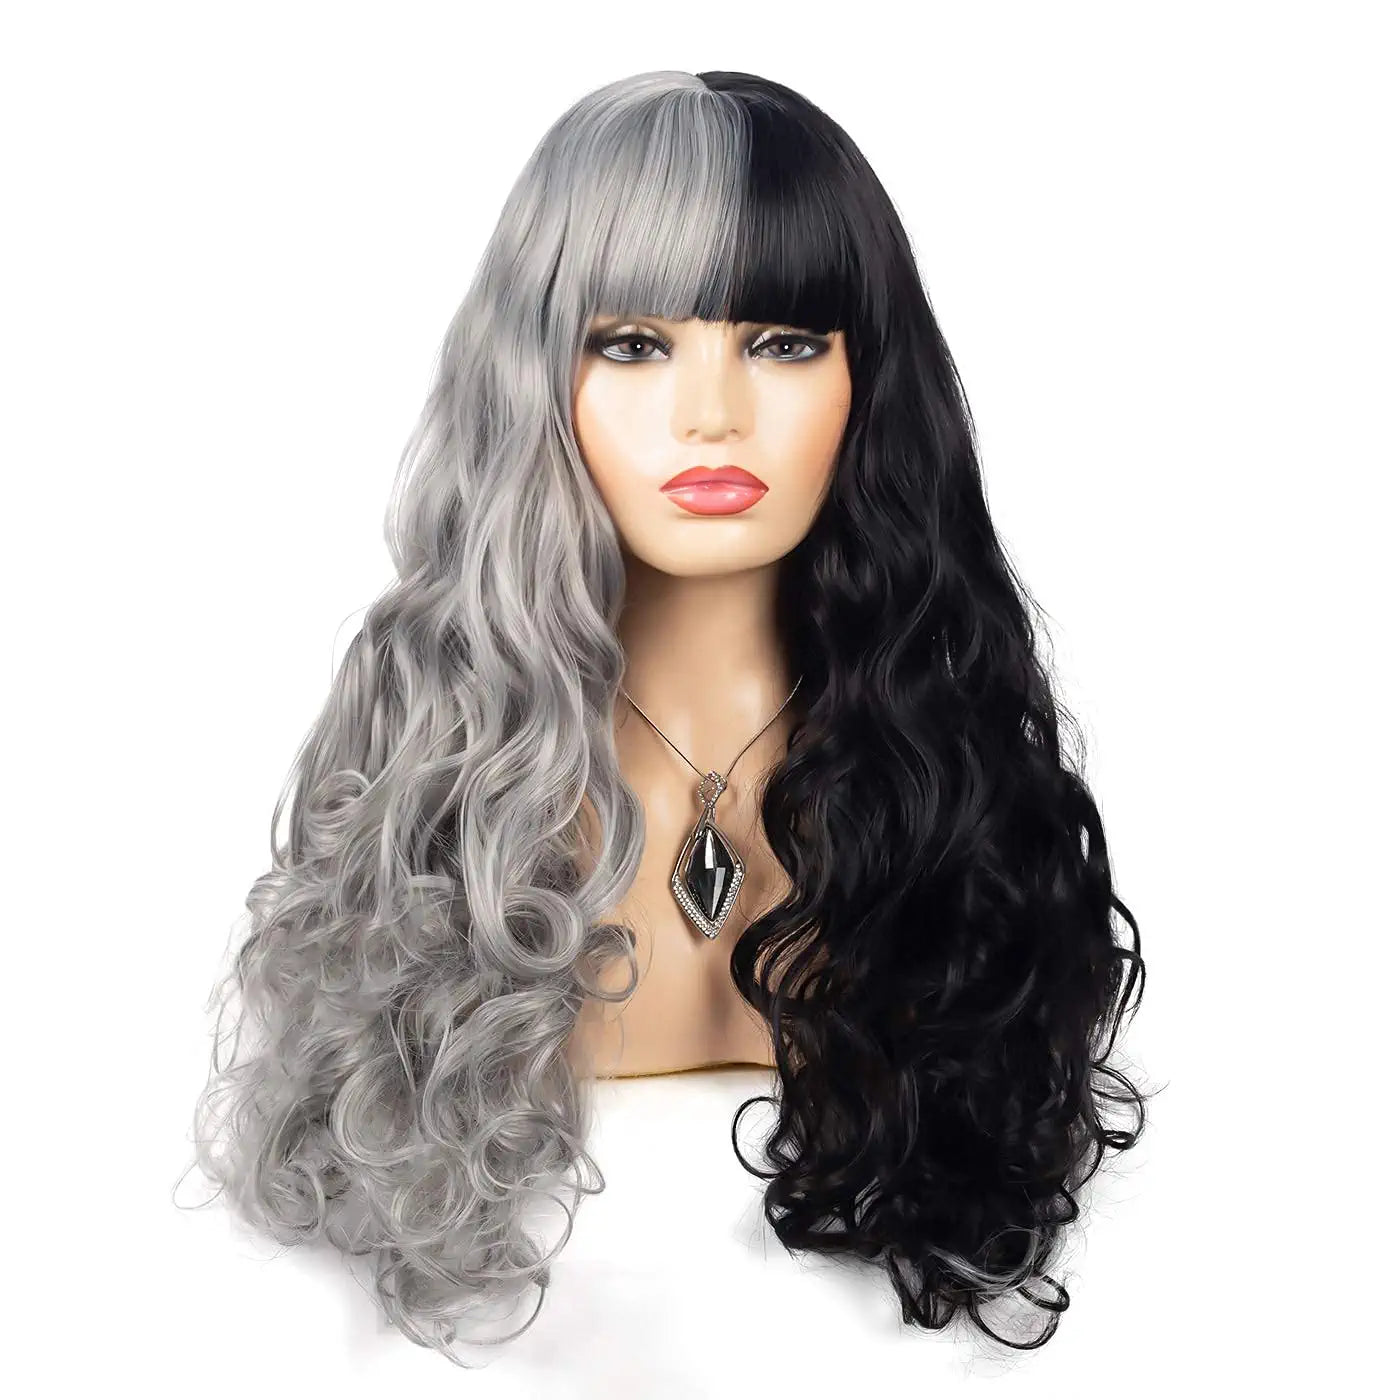 Half Black Half Gray Split Dye Wavy Hair Wig With Bangs